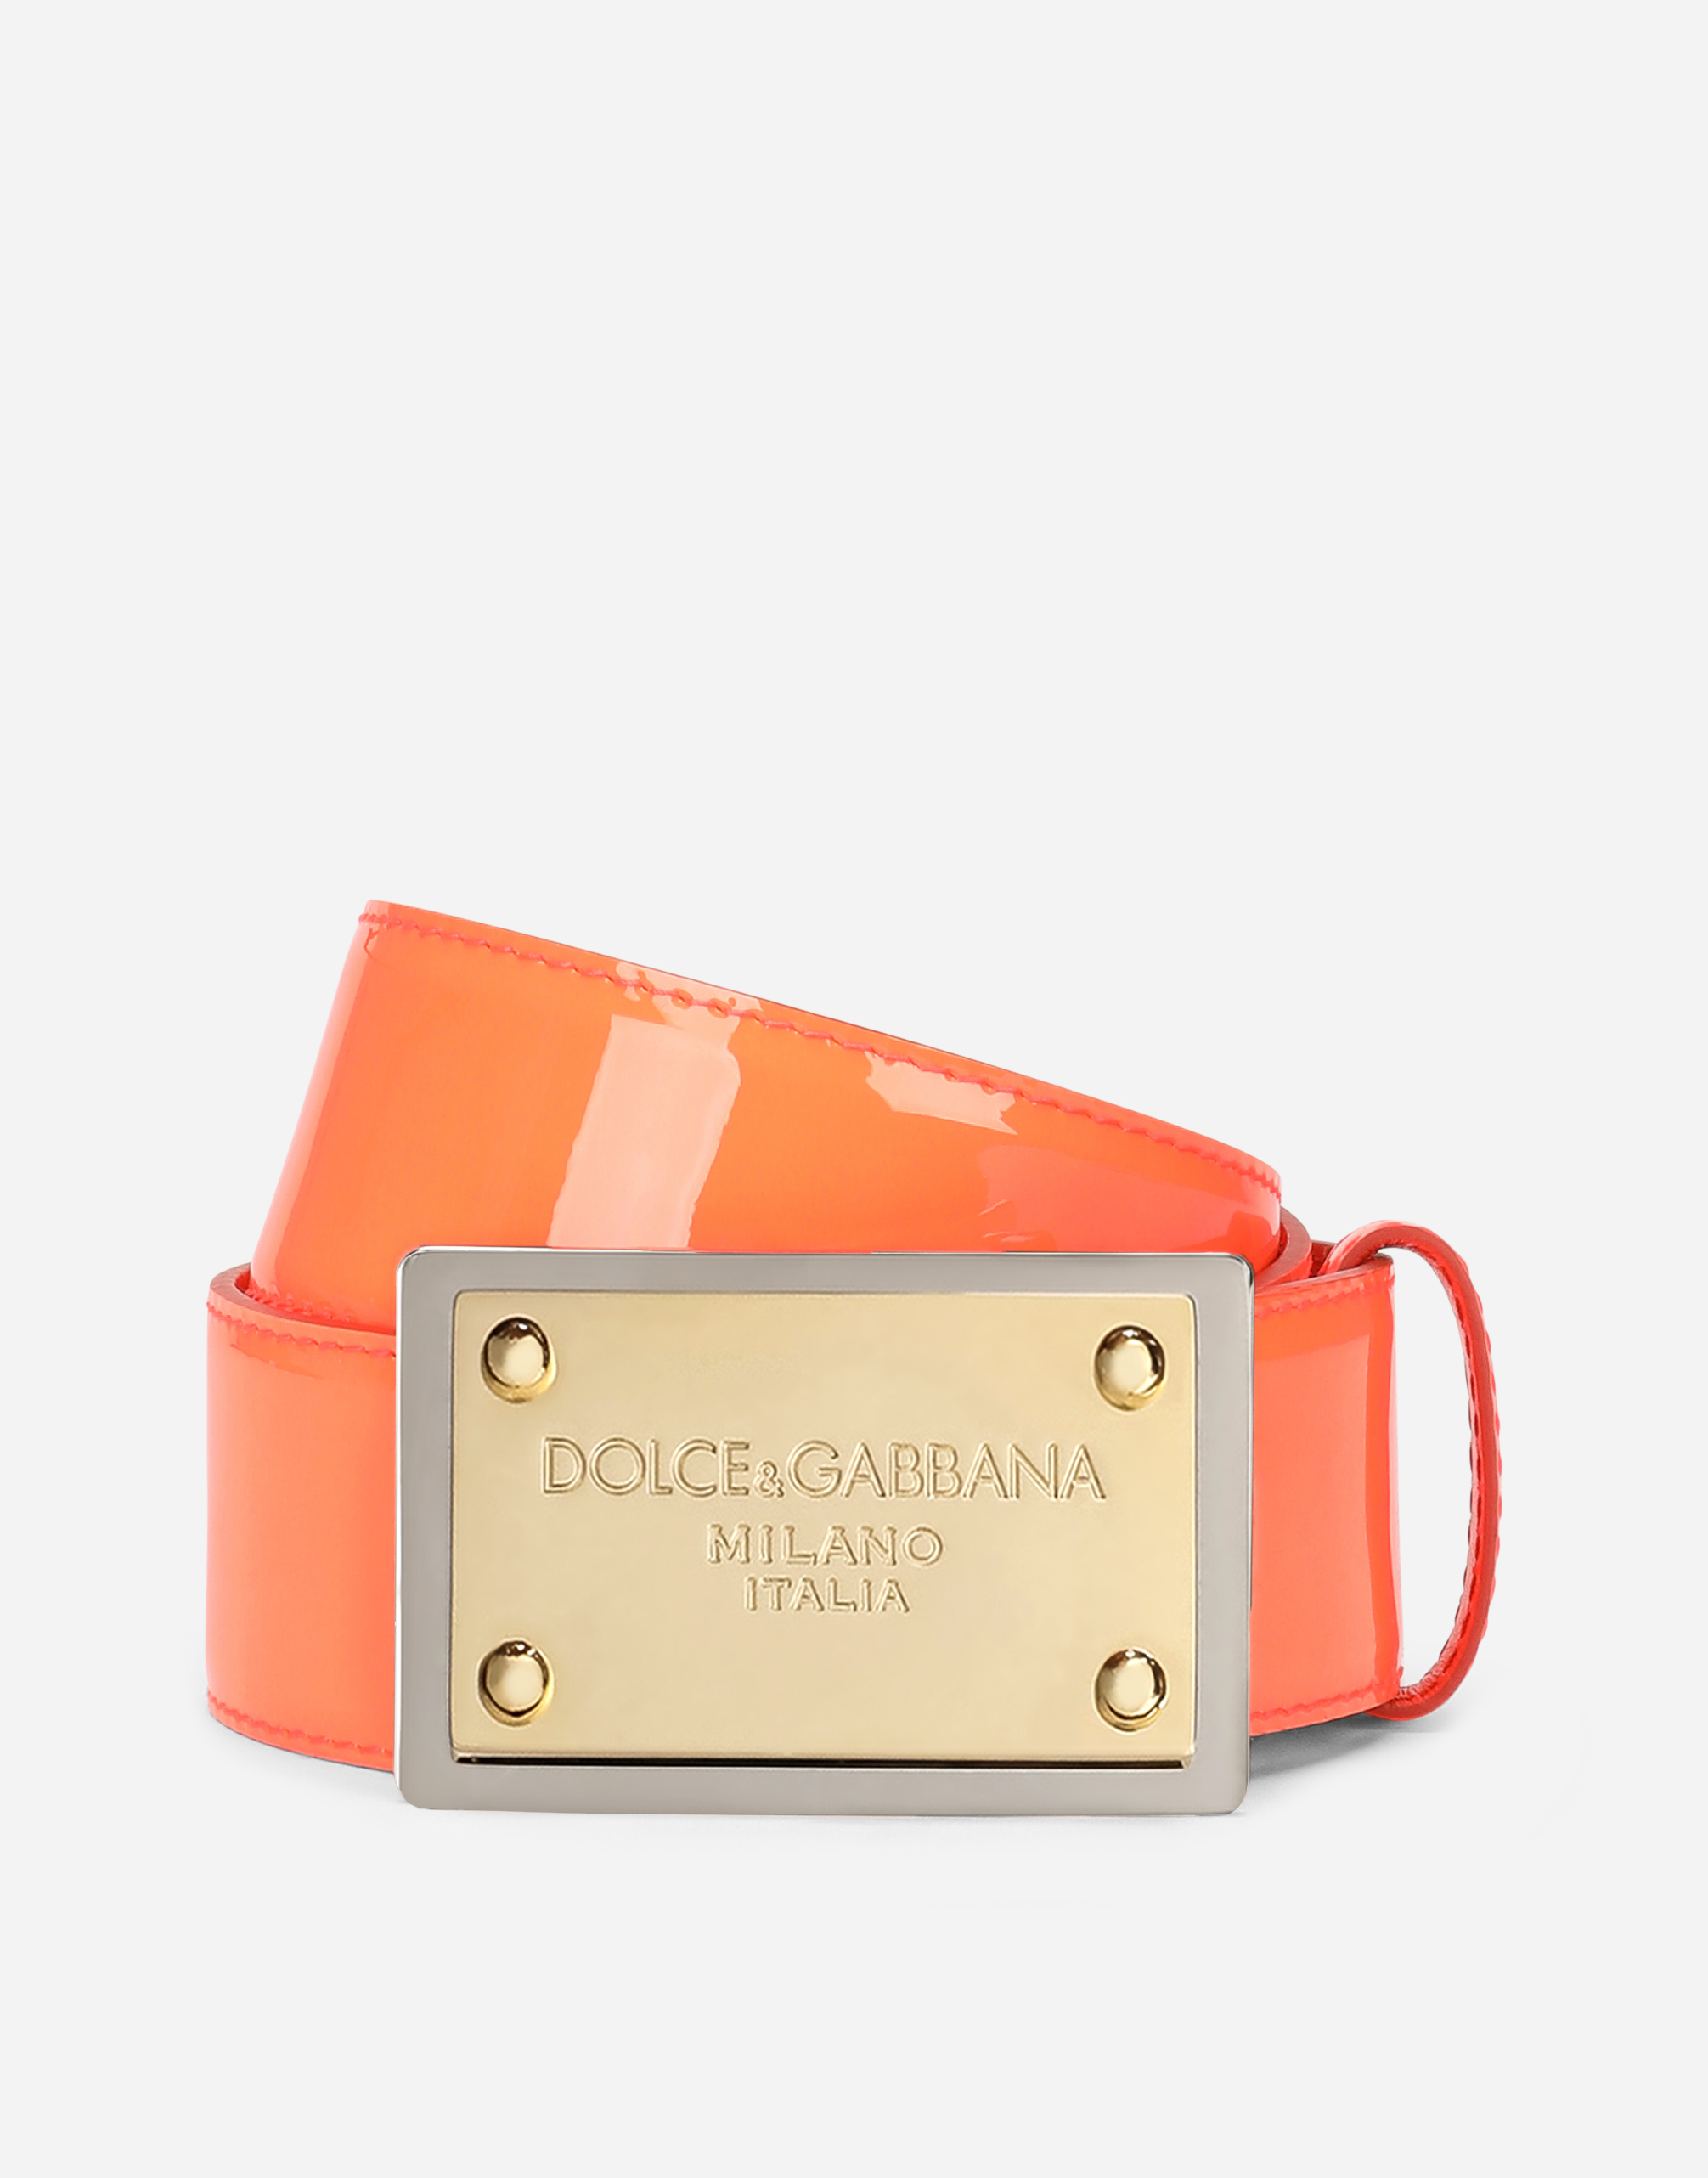 Neon patent leather belt in Orange